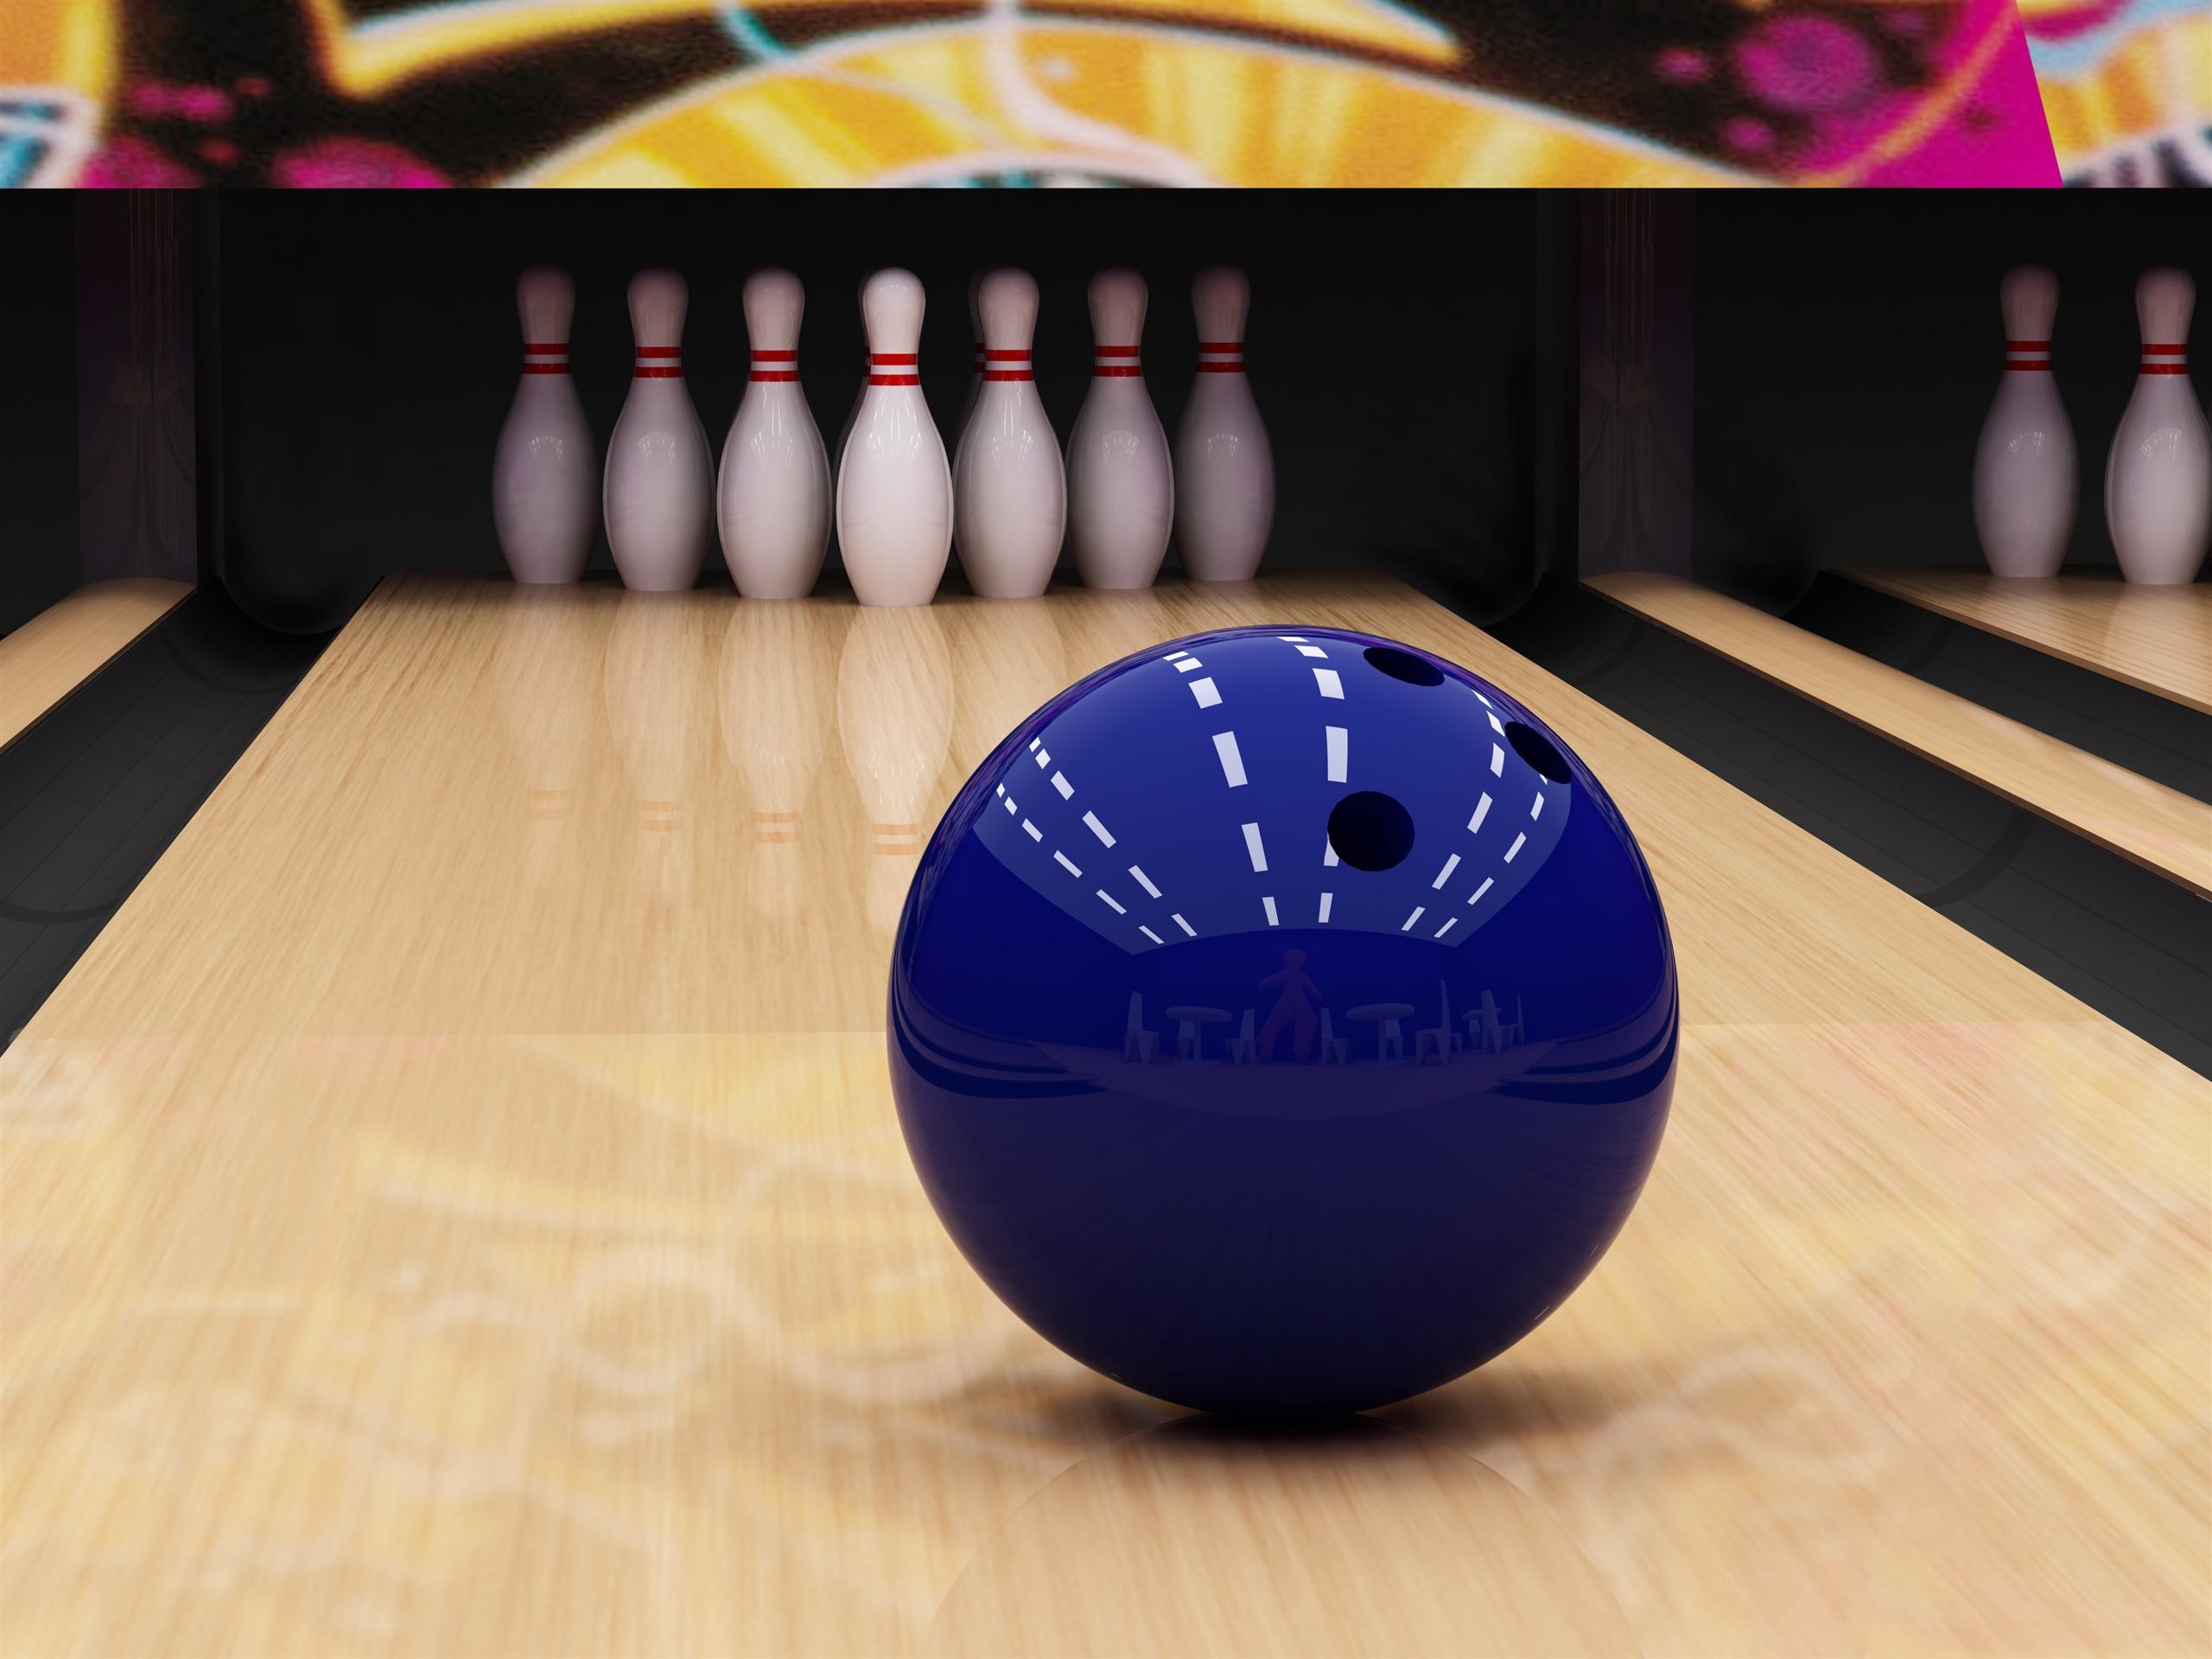 Bowling Balls 2560x1920